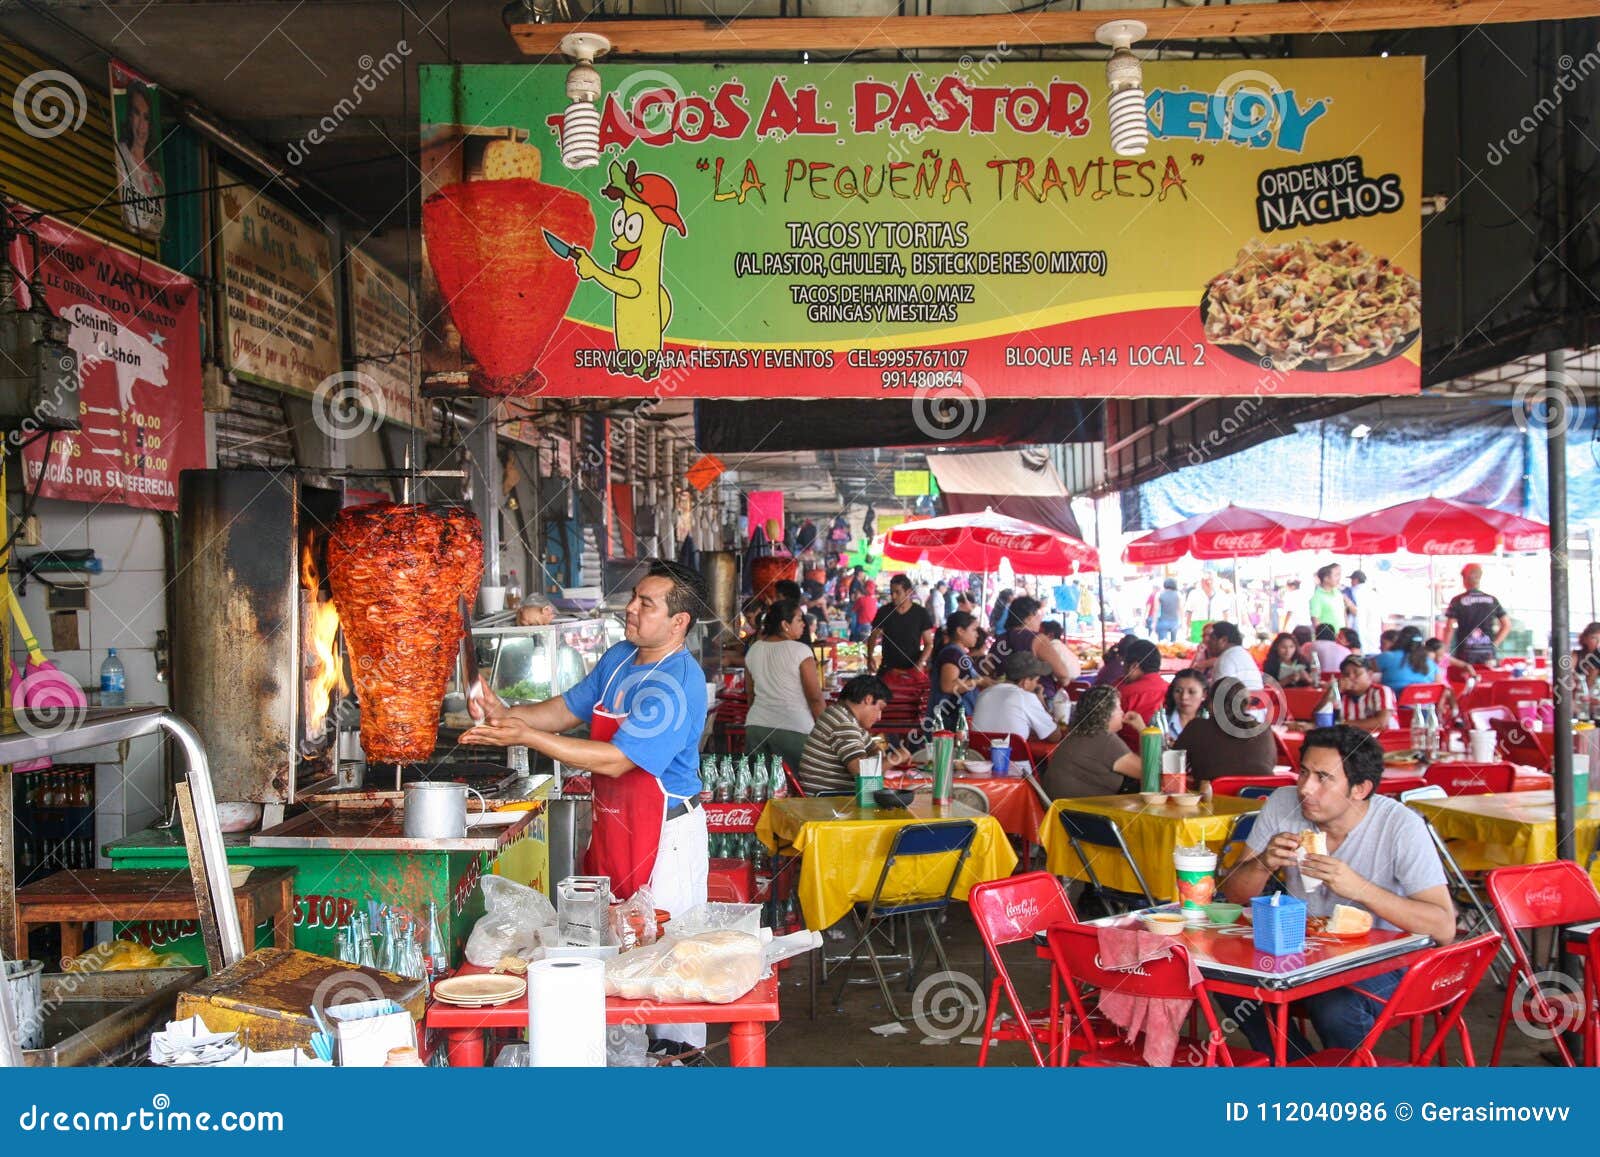 Fast Food Cuisine On A Local Market In Merida Yucatan Mexico